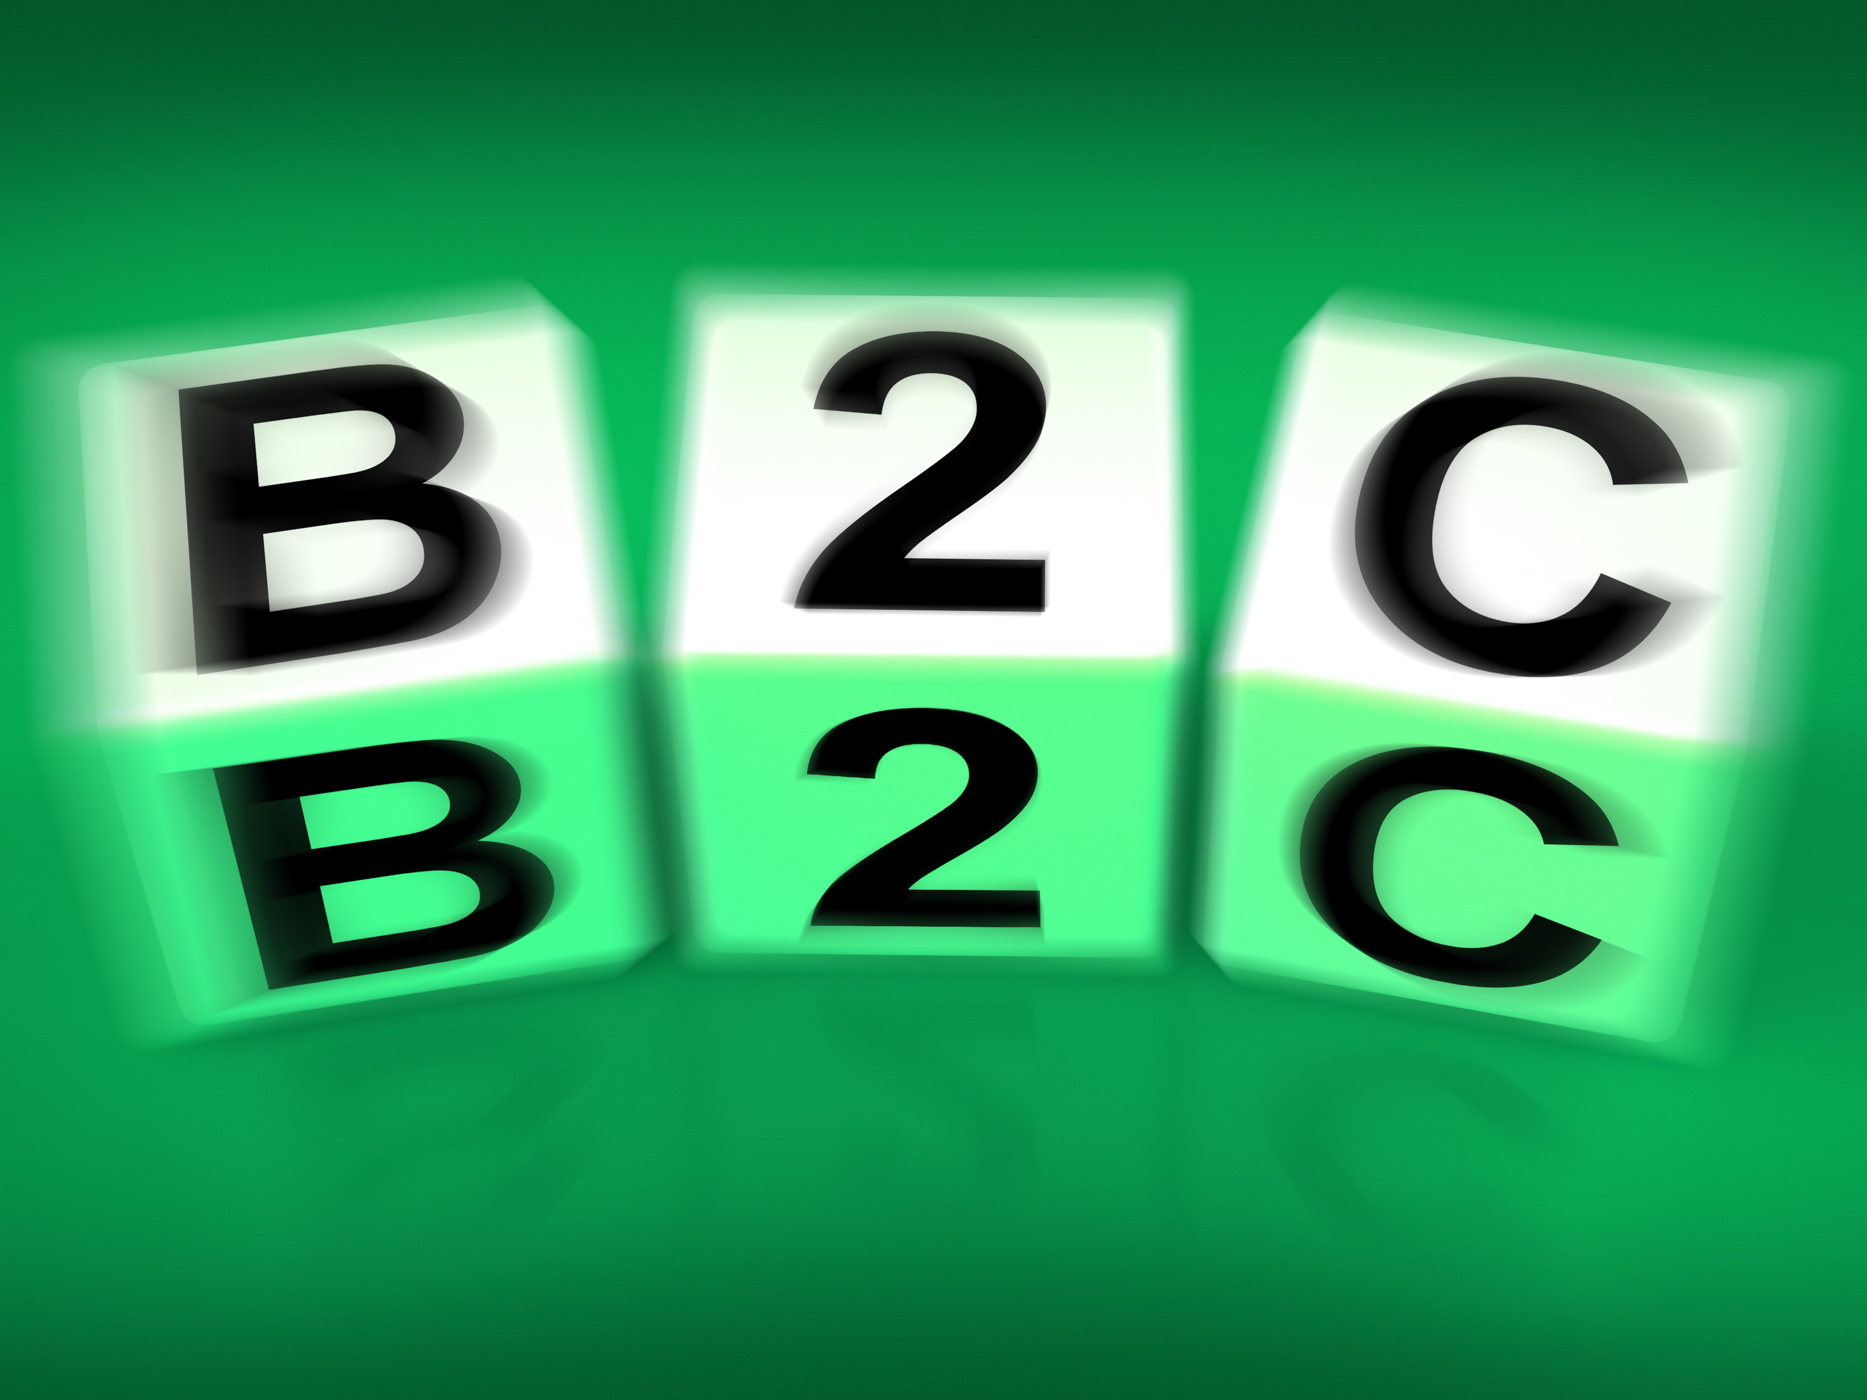 B2C Blocks Represent Business and Commerce or Consumer